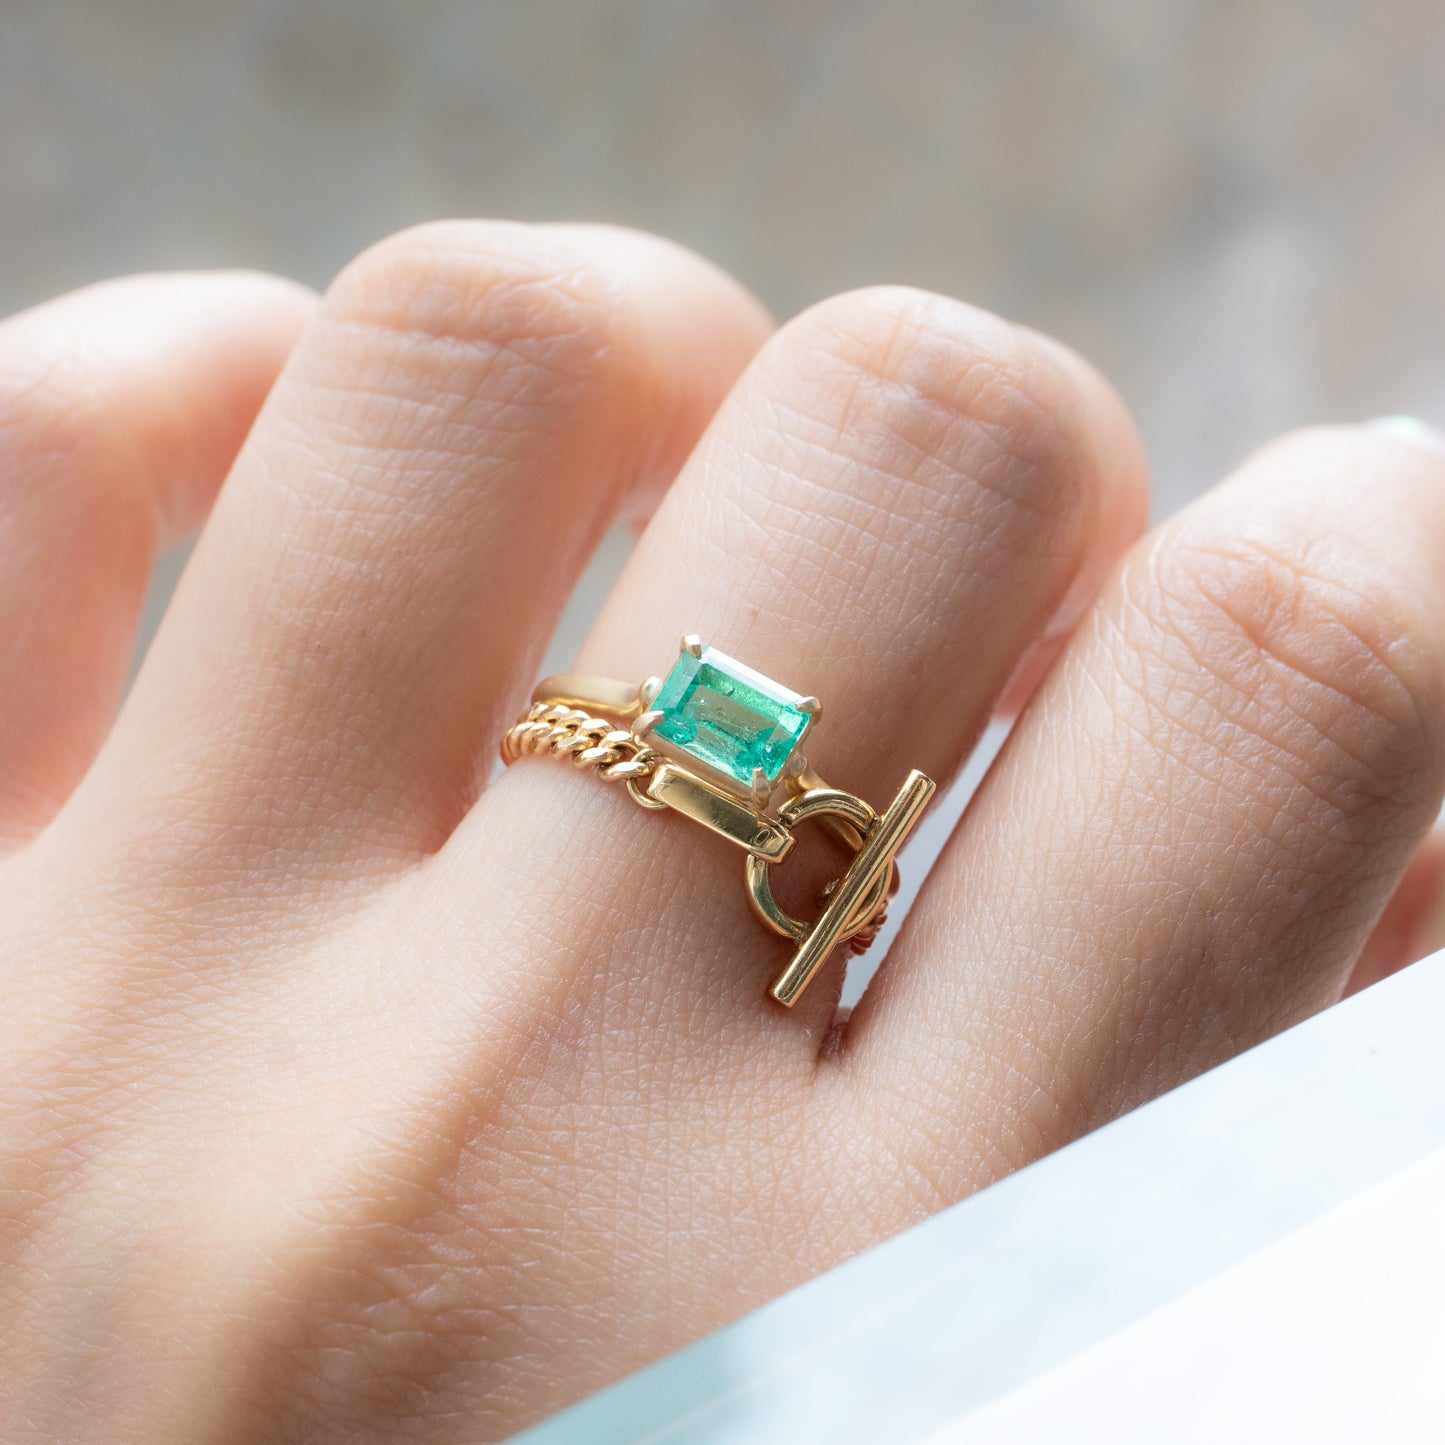 Prong Ring - Emerald